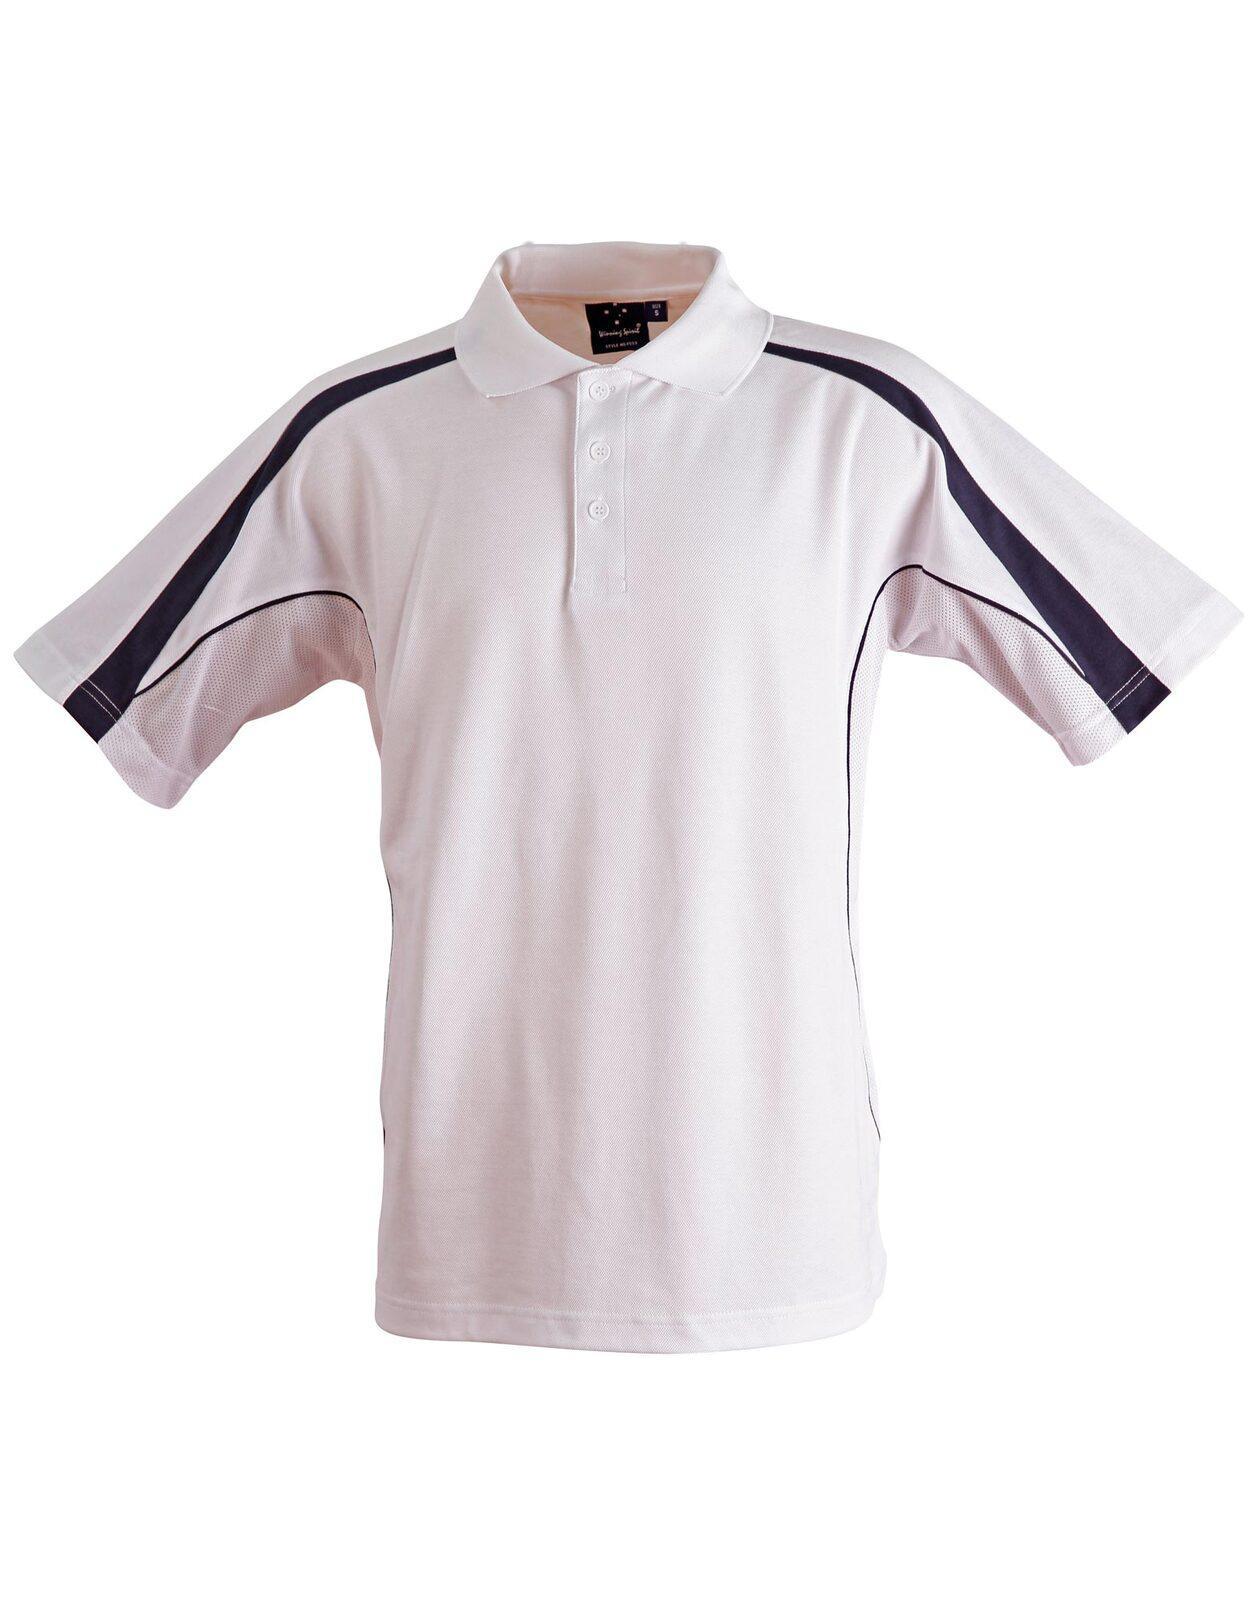 PS53 Sz 3XL LEGEND Polyester Cotton Men's Polo Shirt White/Navy